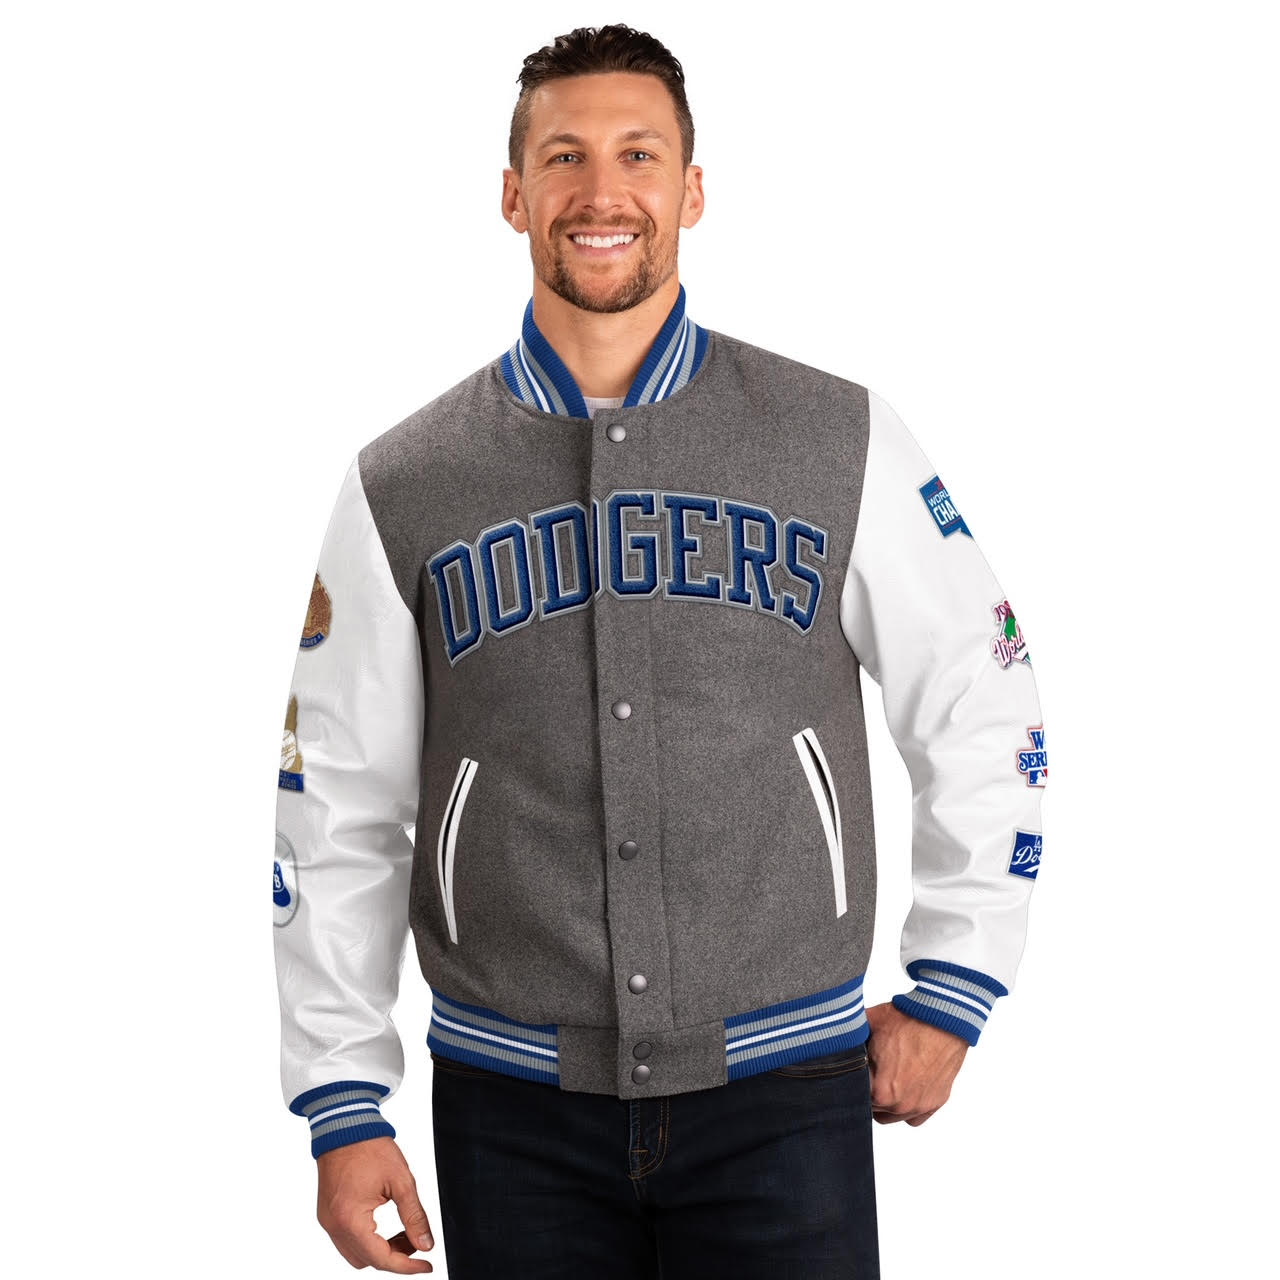 Men’s Dodgers Varsity Jacket